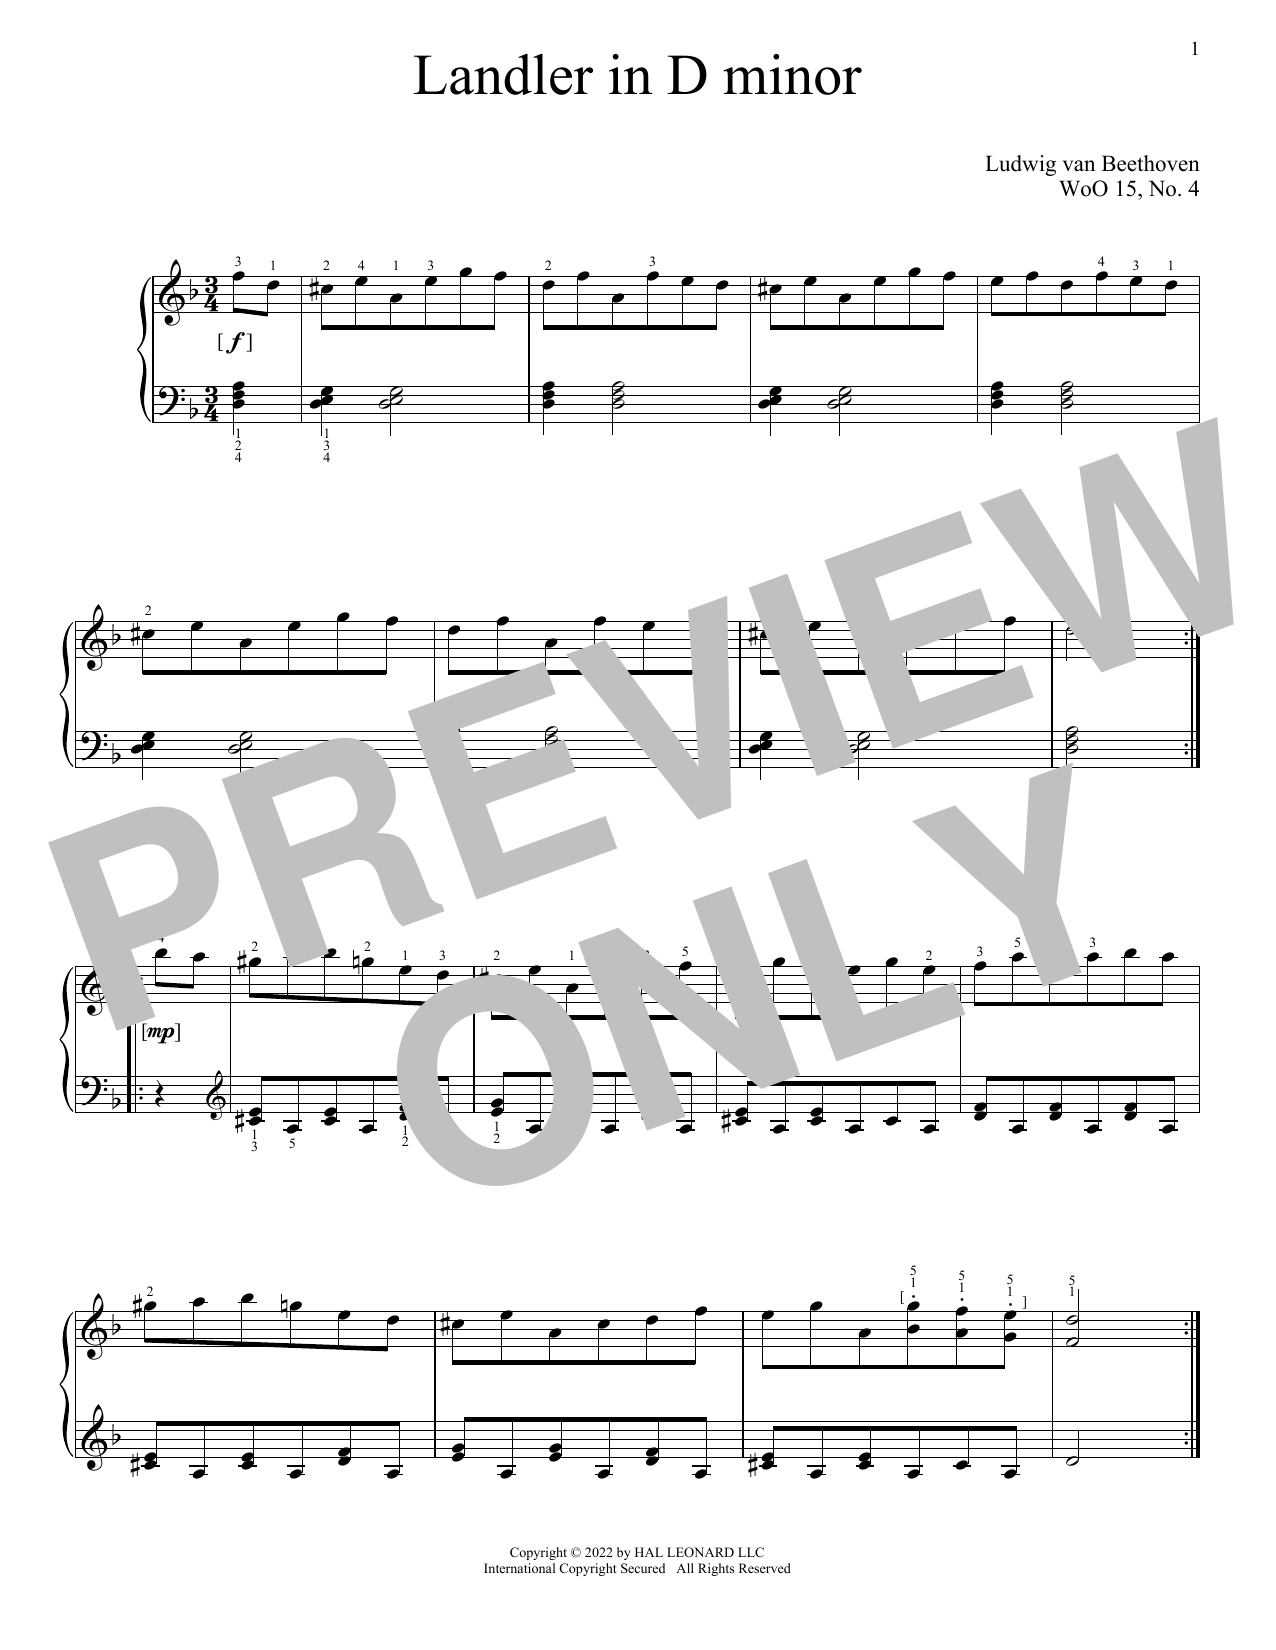 Download Ludwig van Beethoven Landler In D Minor, WoO 15, No. 4 Sheet Music